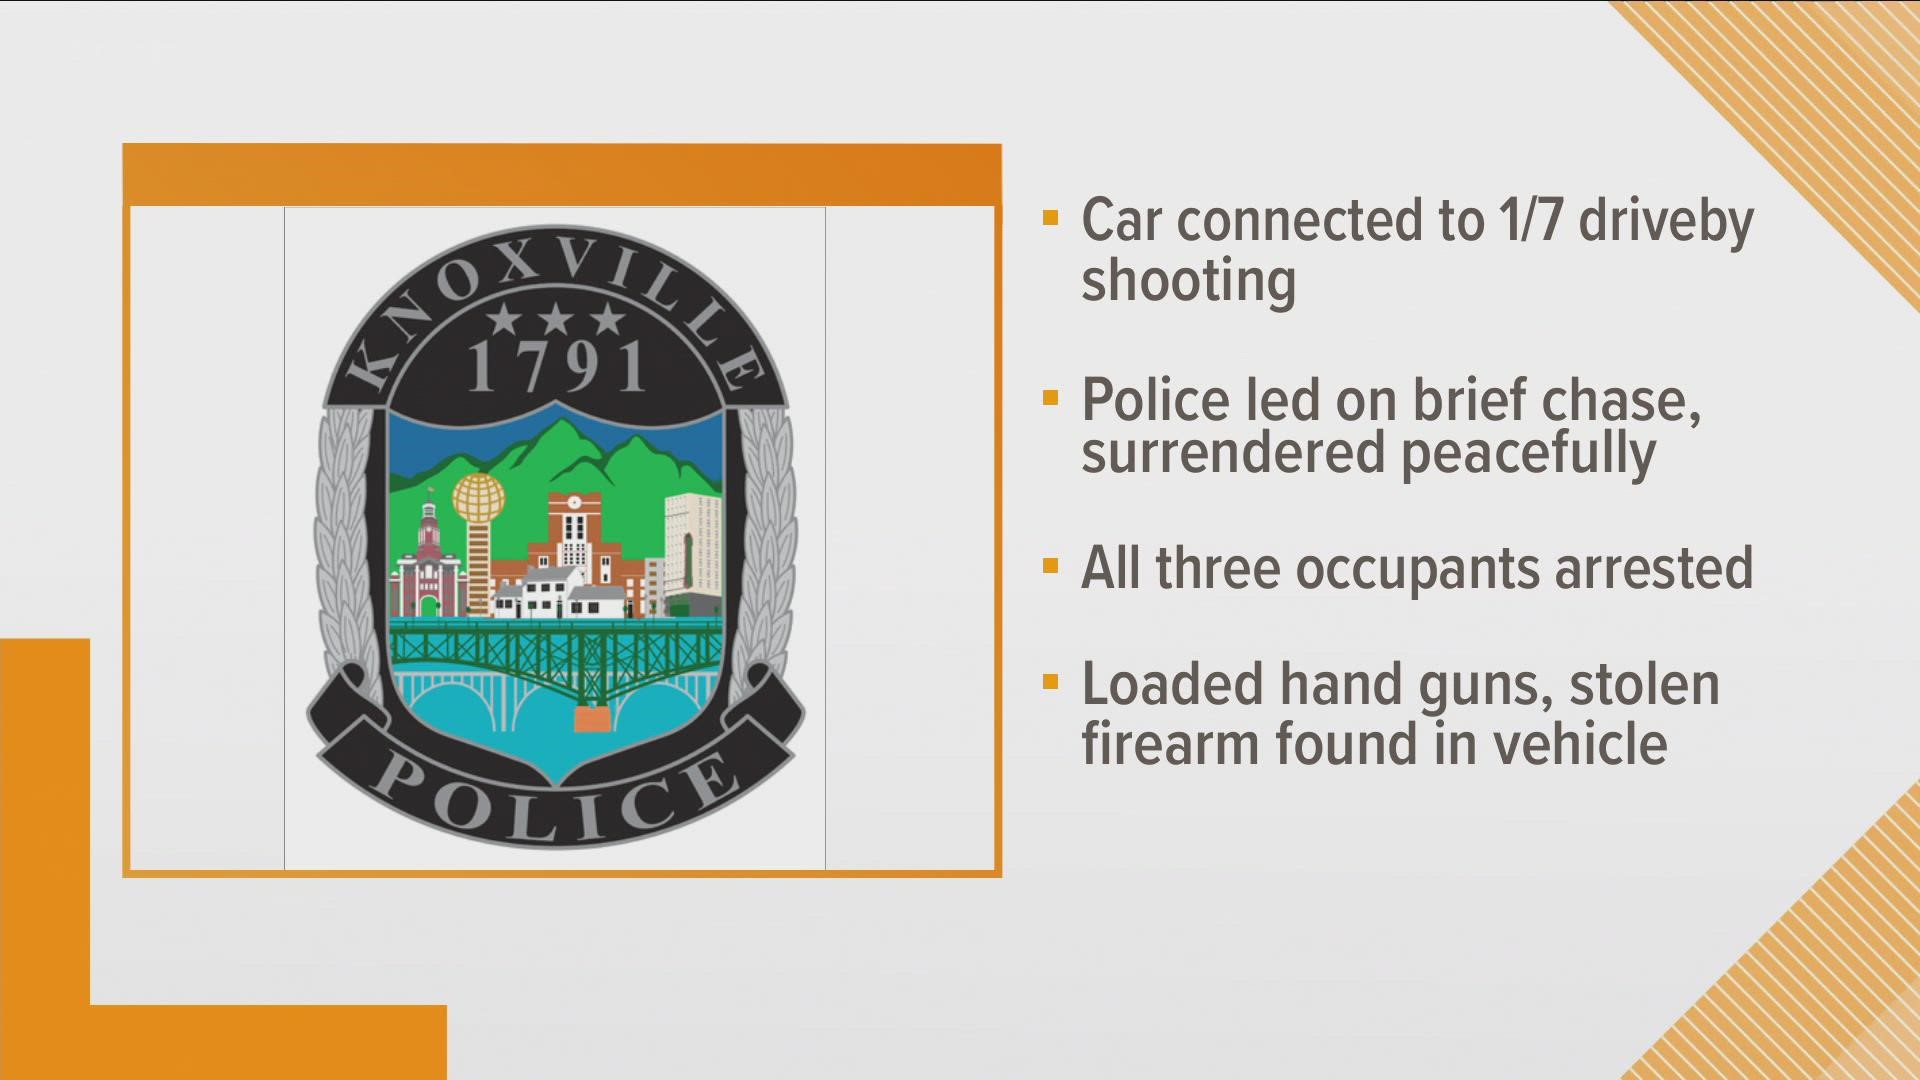 Three loaded hand guns were found in the car.